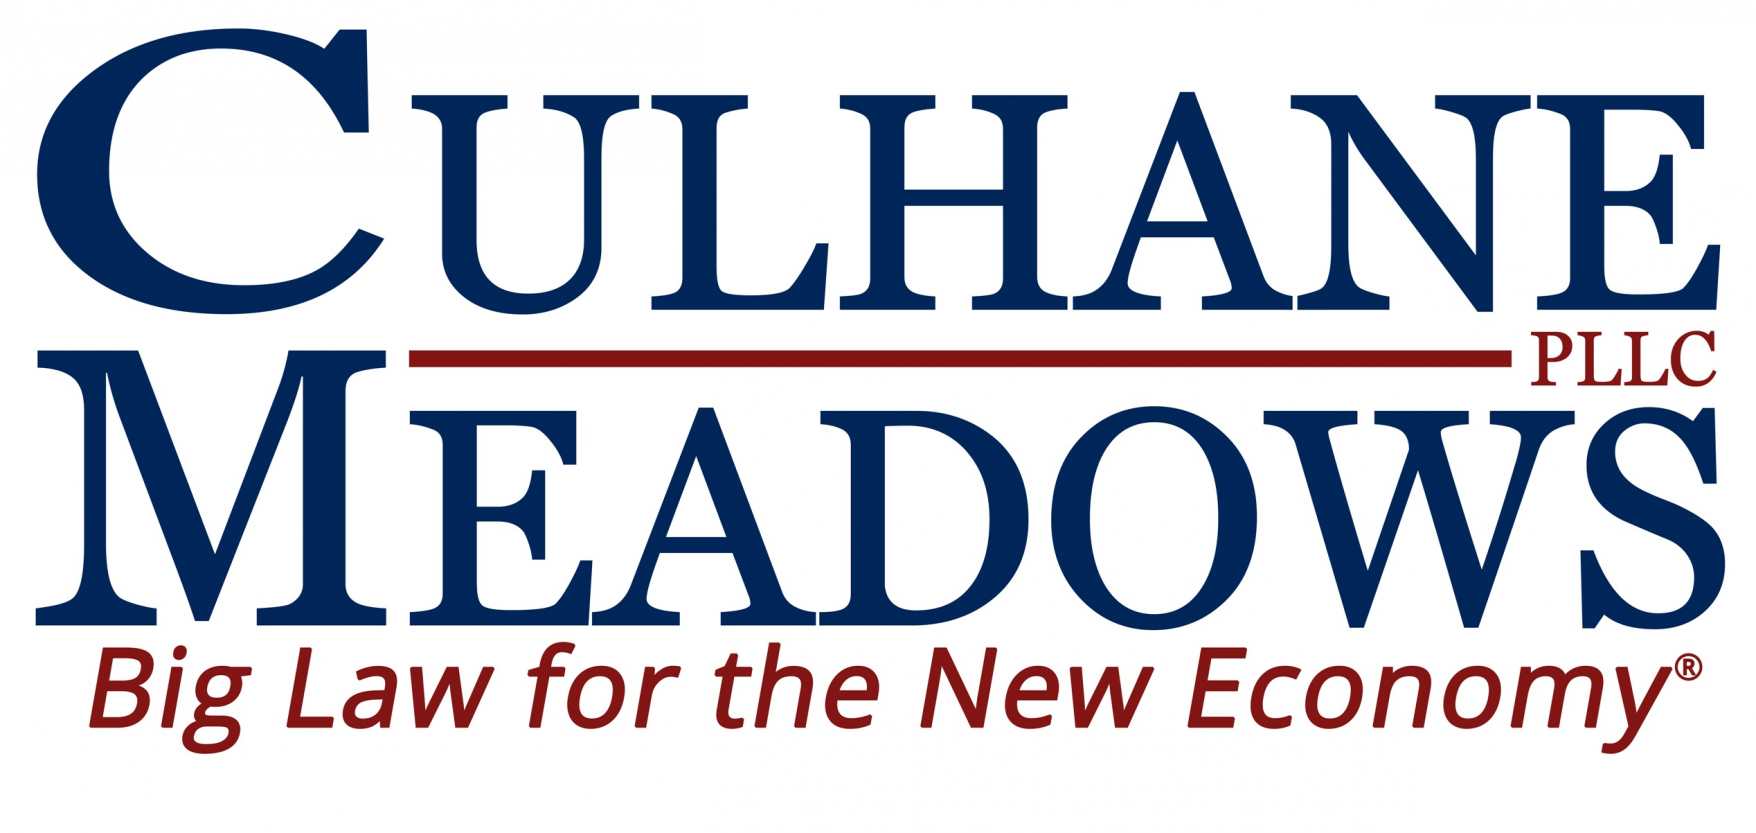 Culhane Meadows Logo